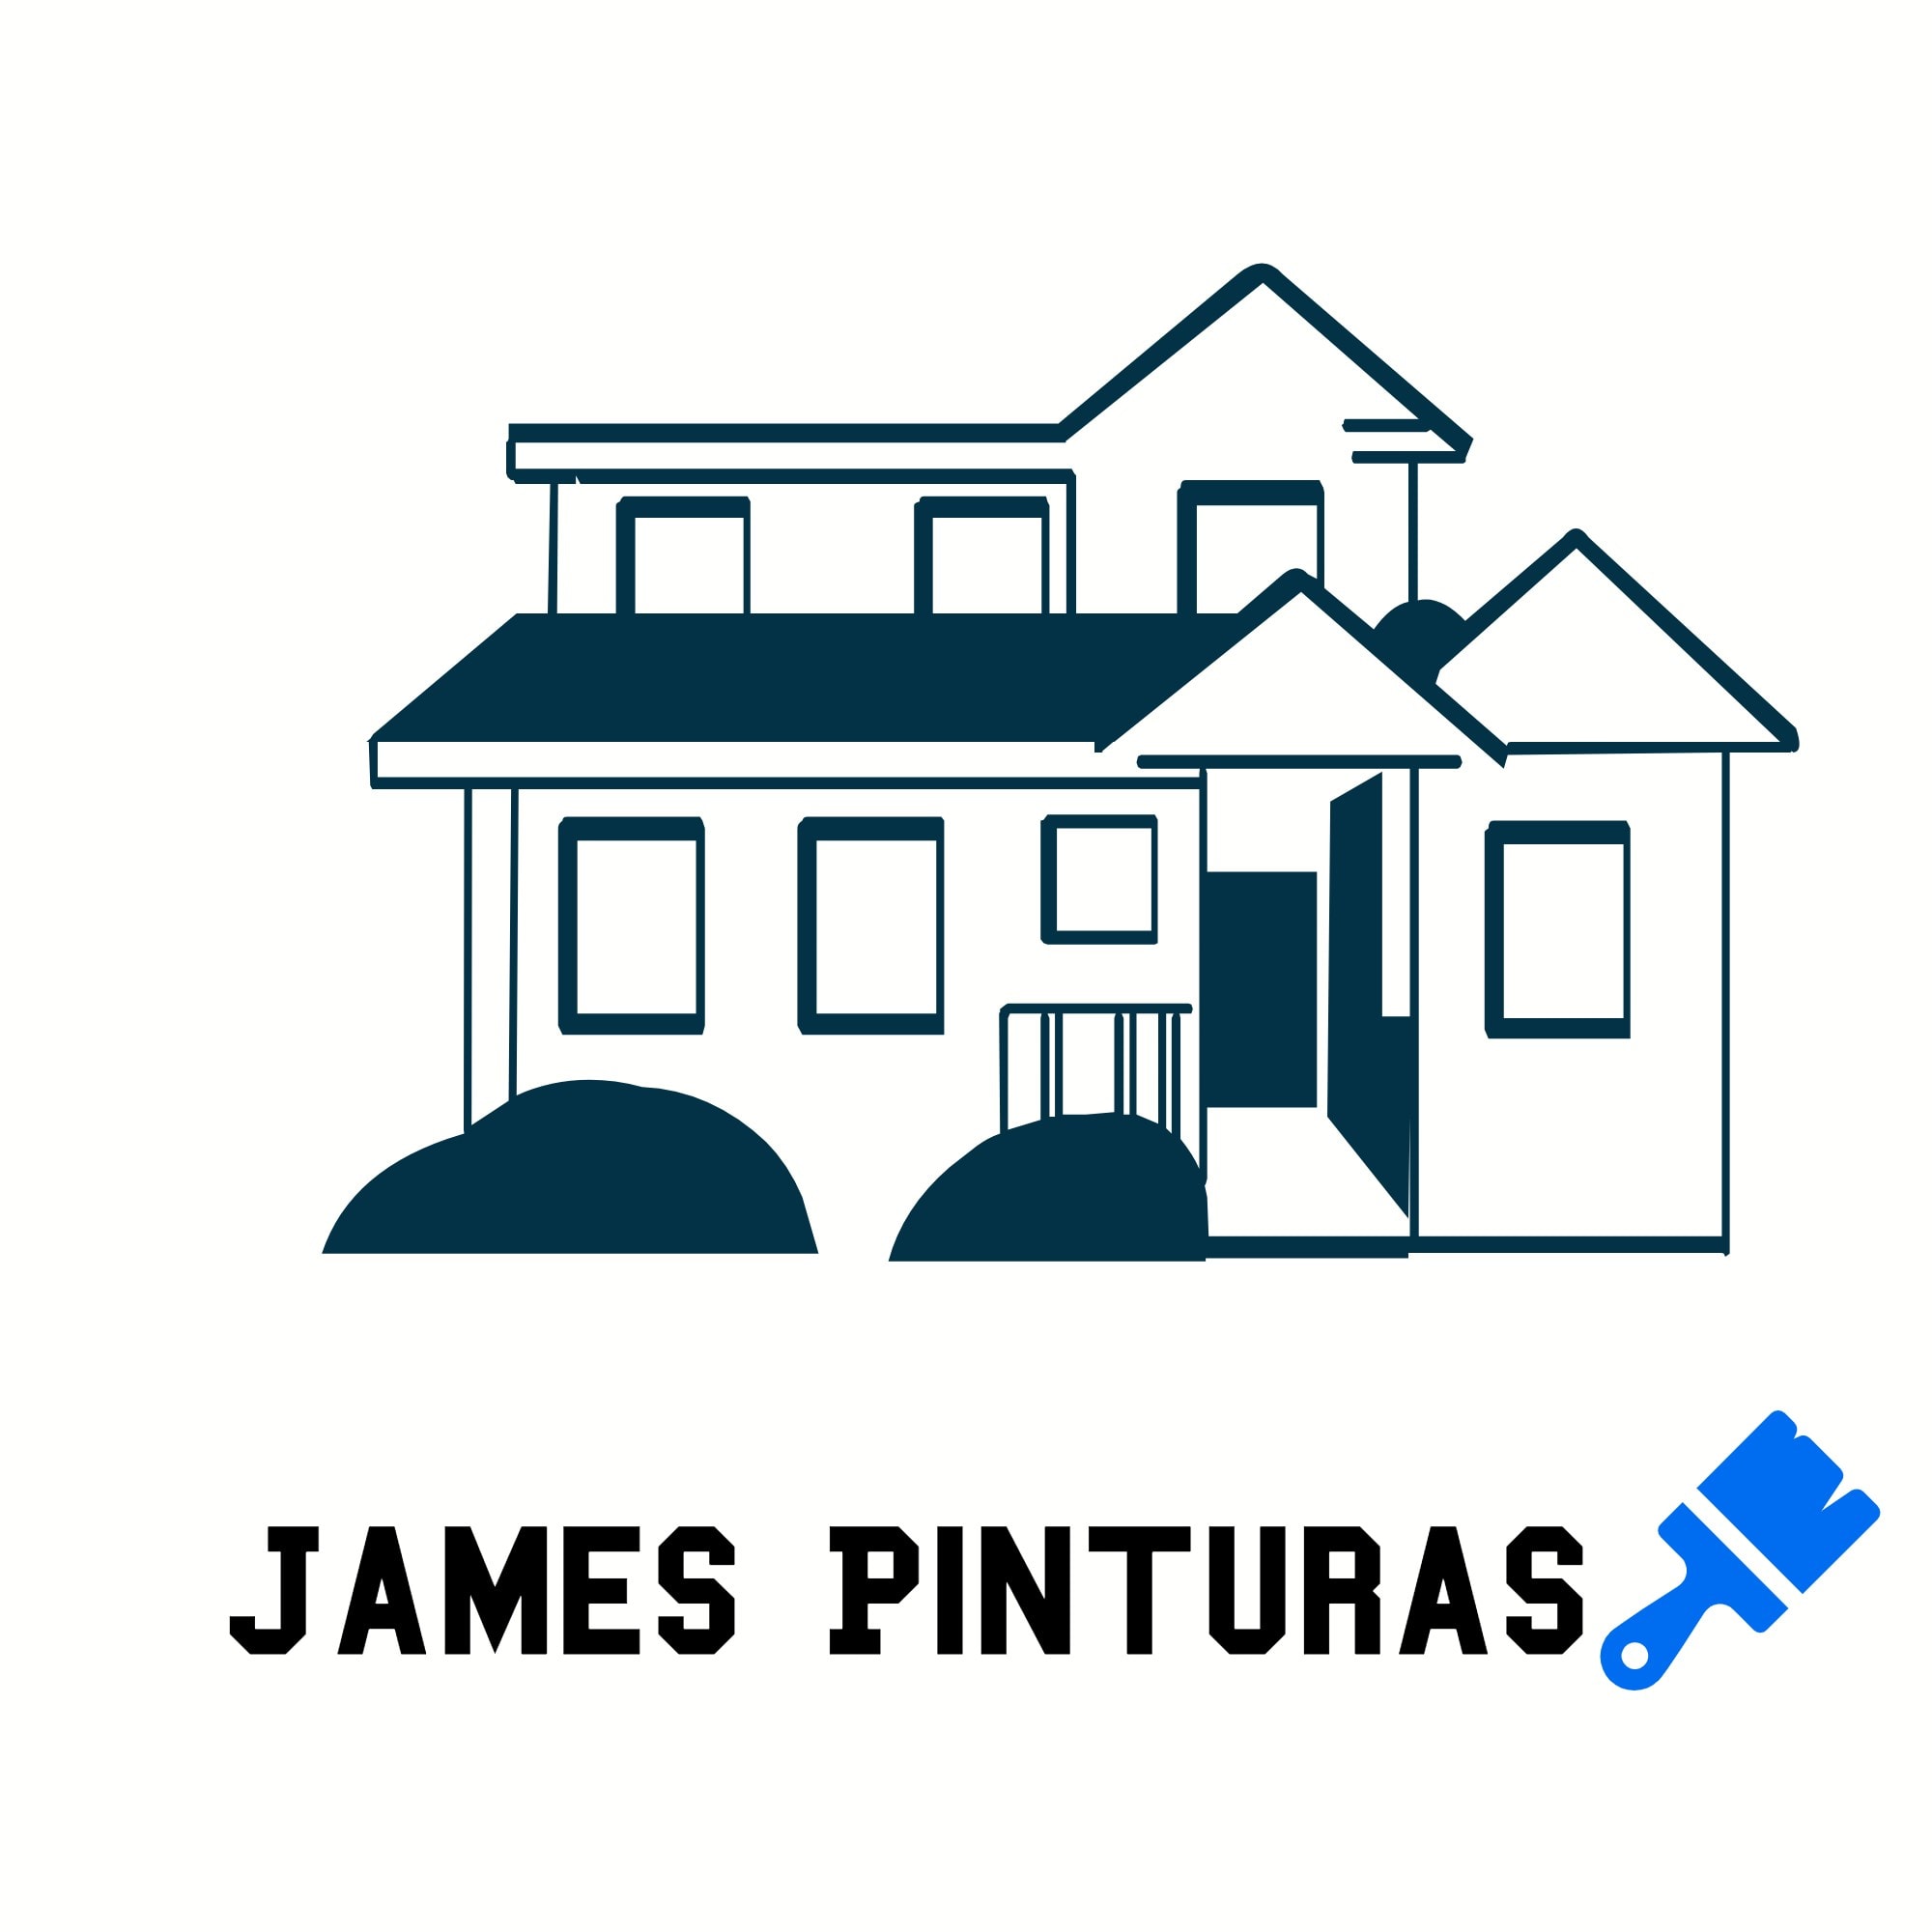 James Pinturas